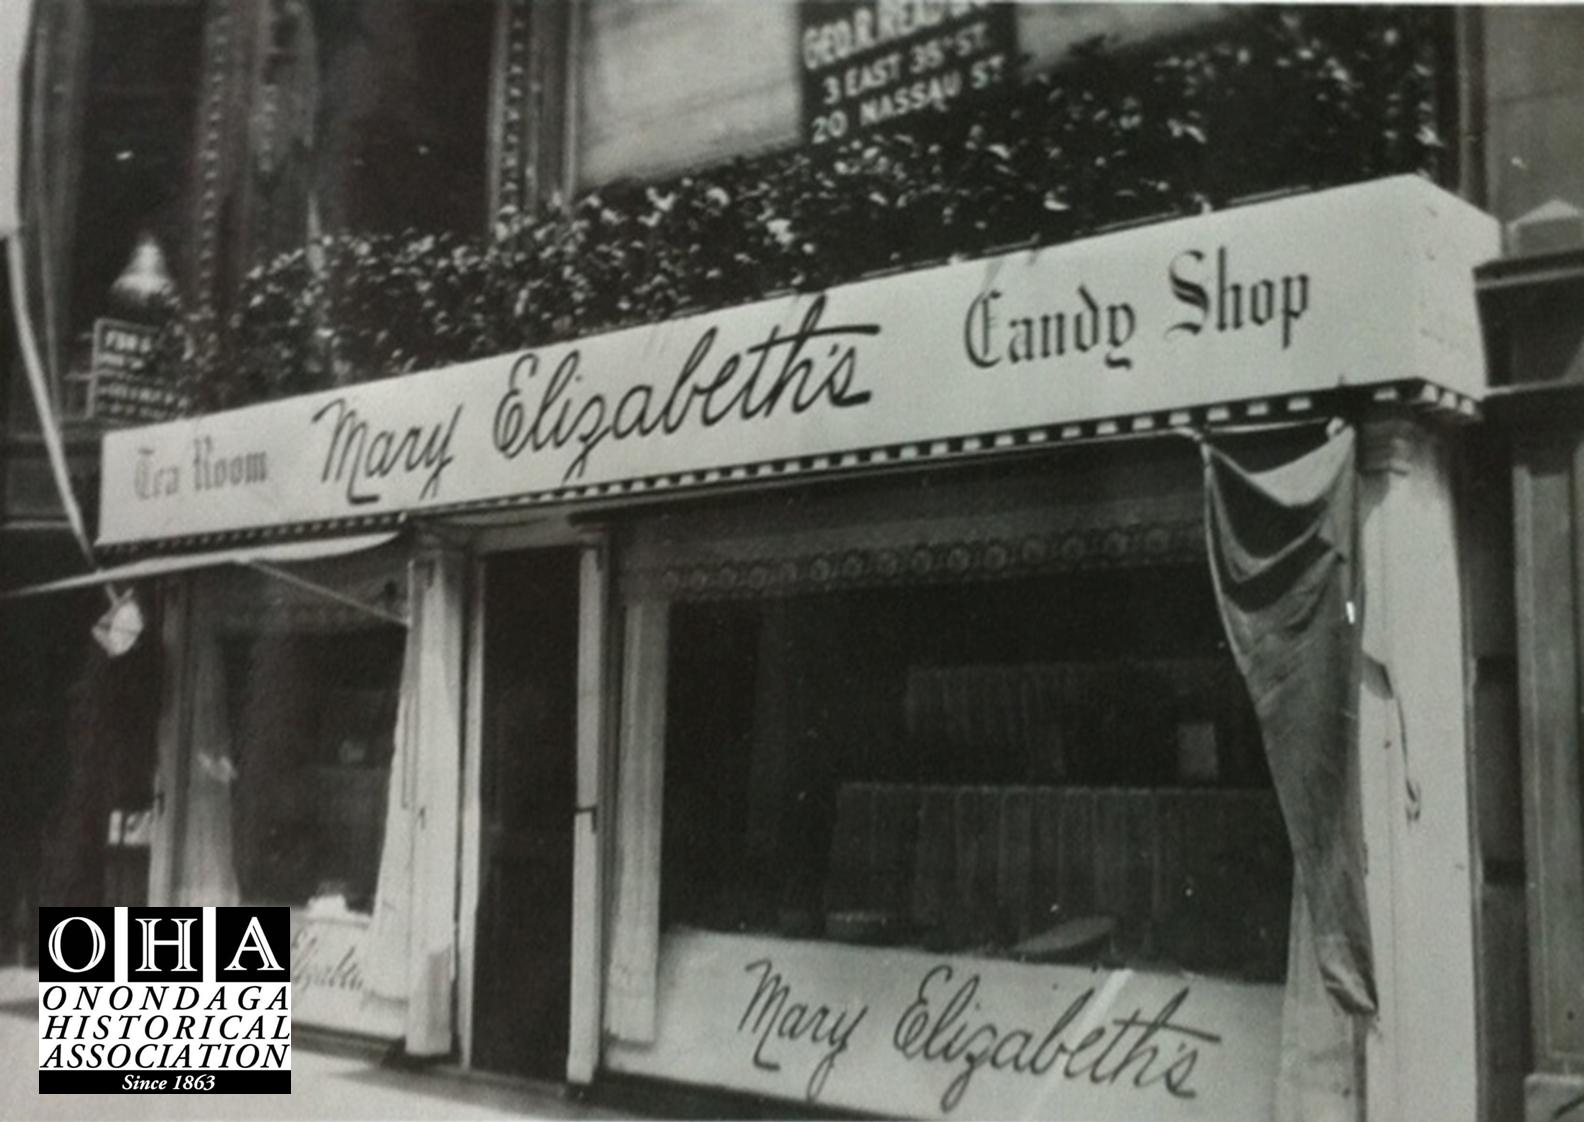 Mary Elizabeth's Candy Shop, NYC 1908